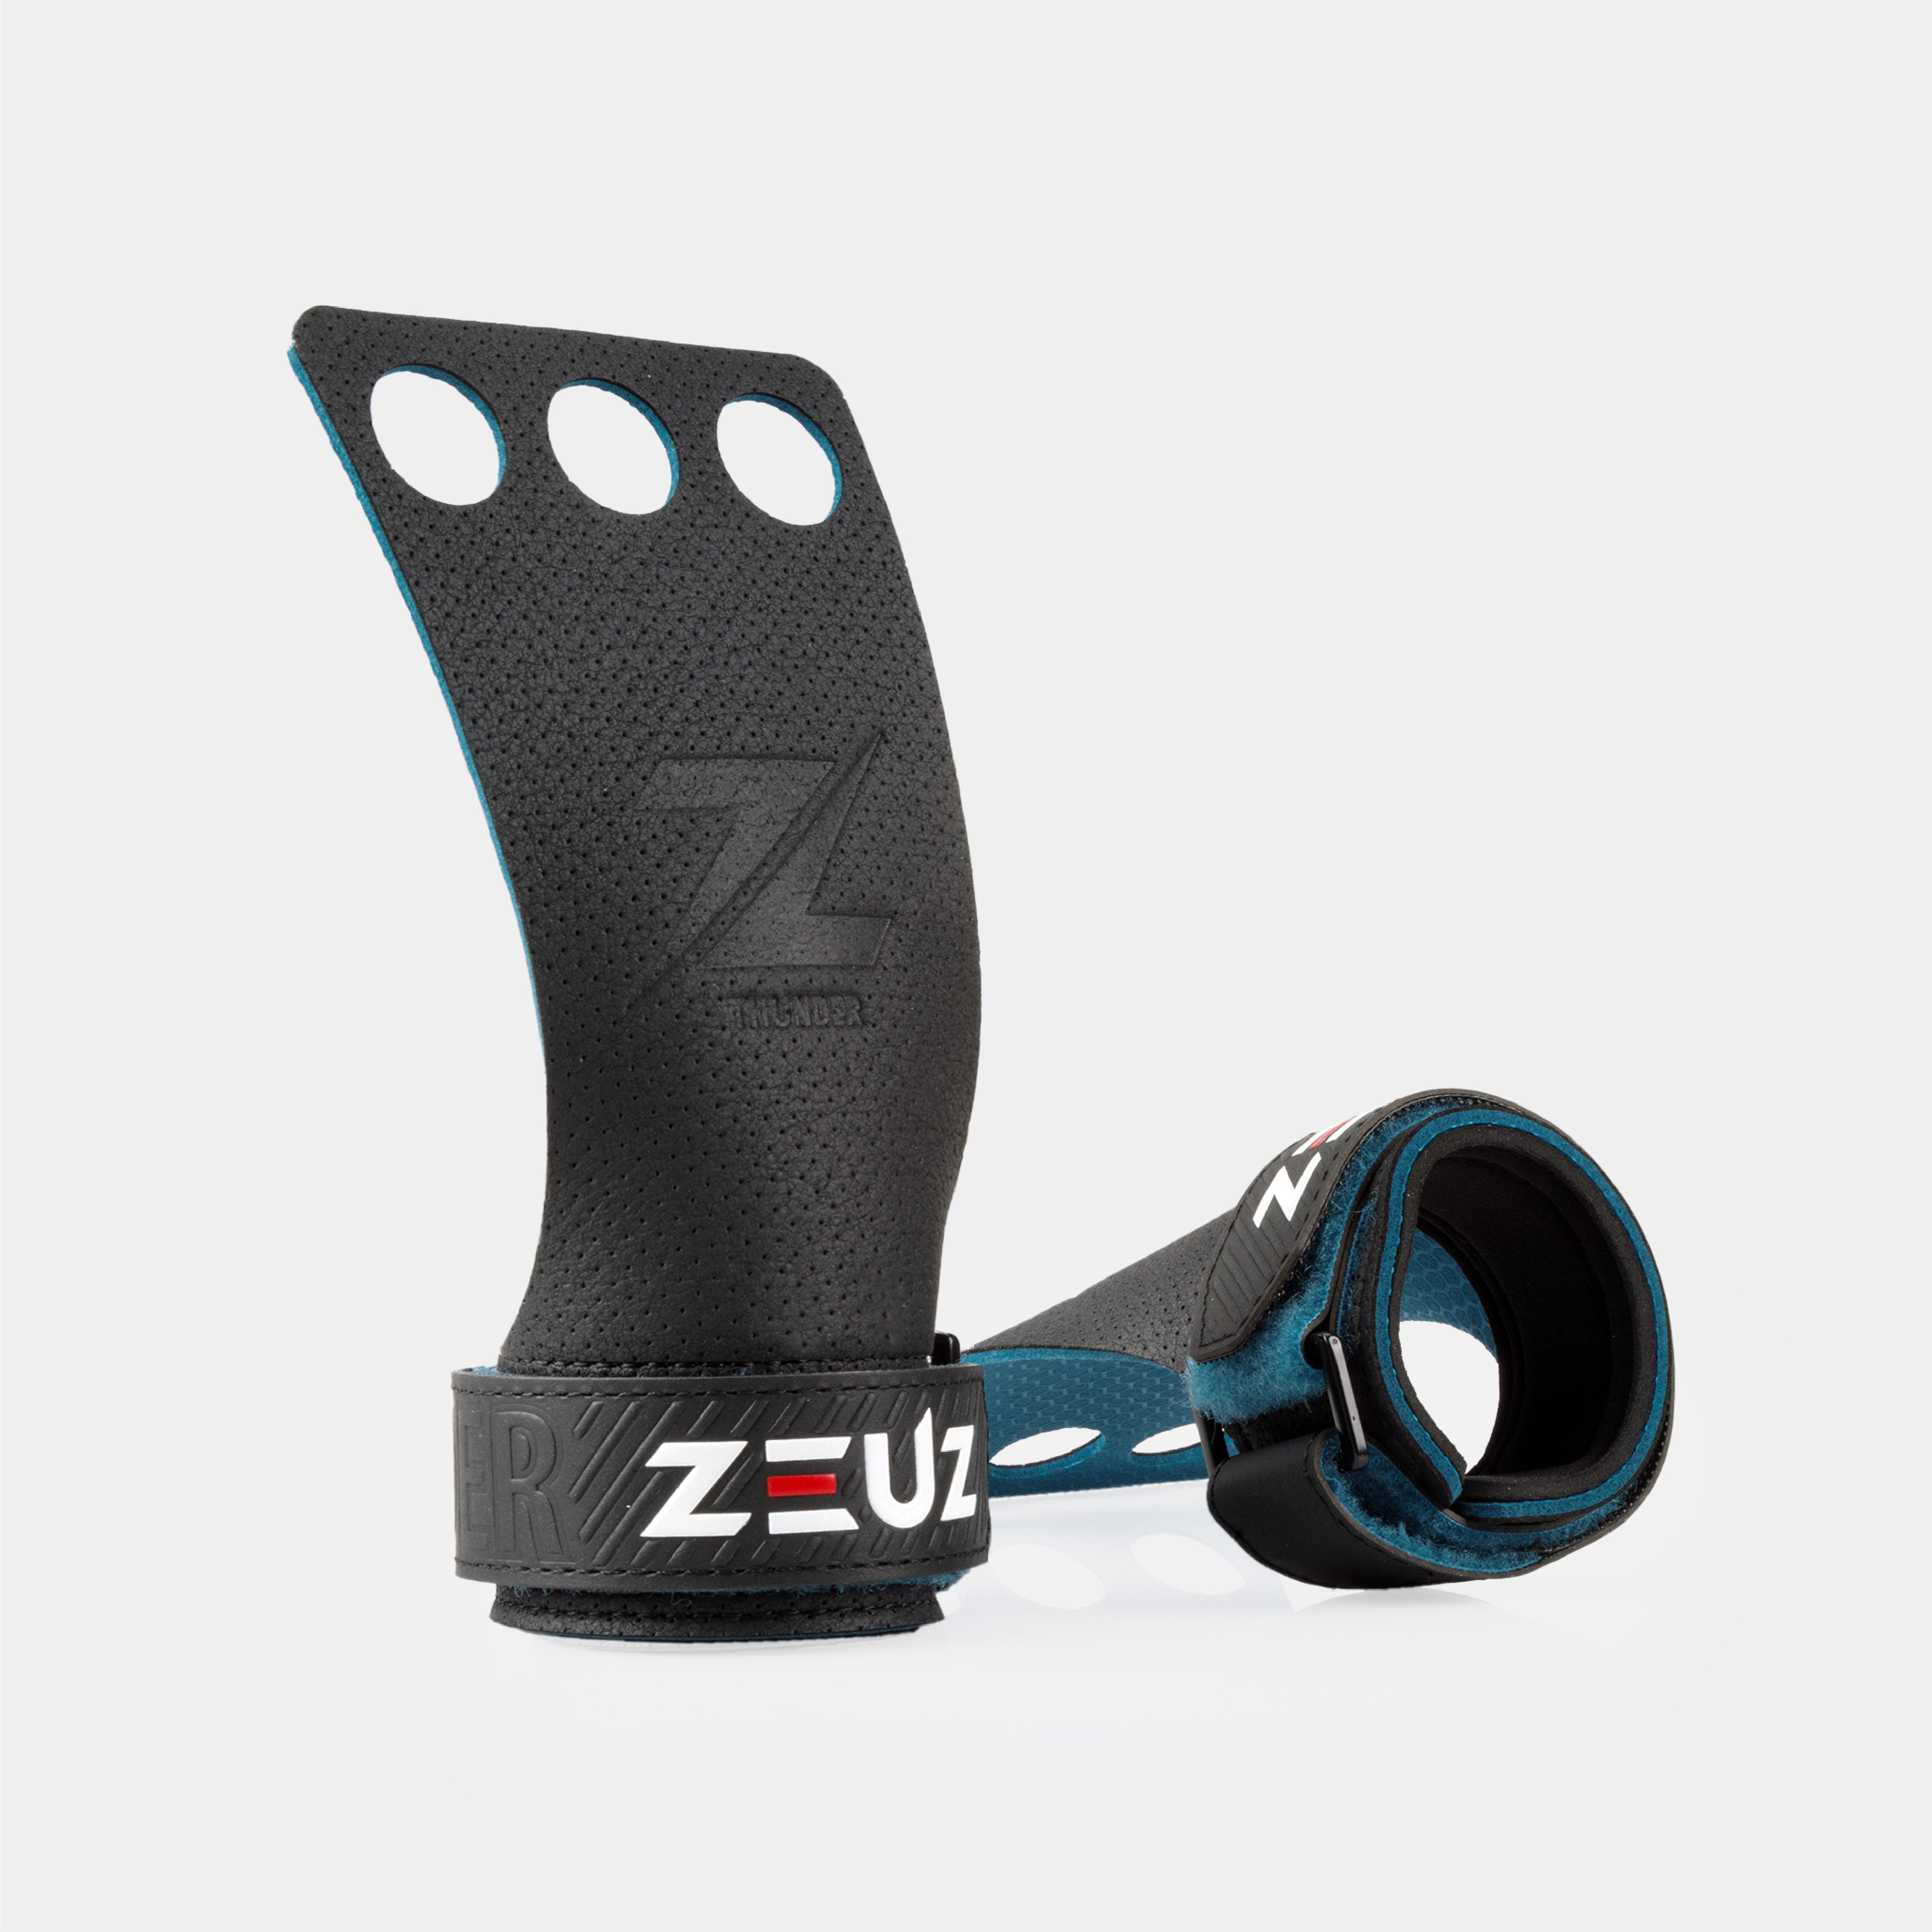 ZEUZ Thunder RX Fitness Microvezel Grips